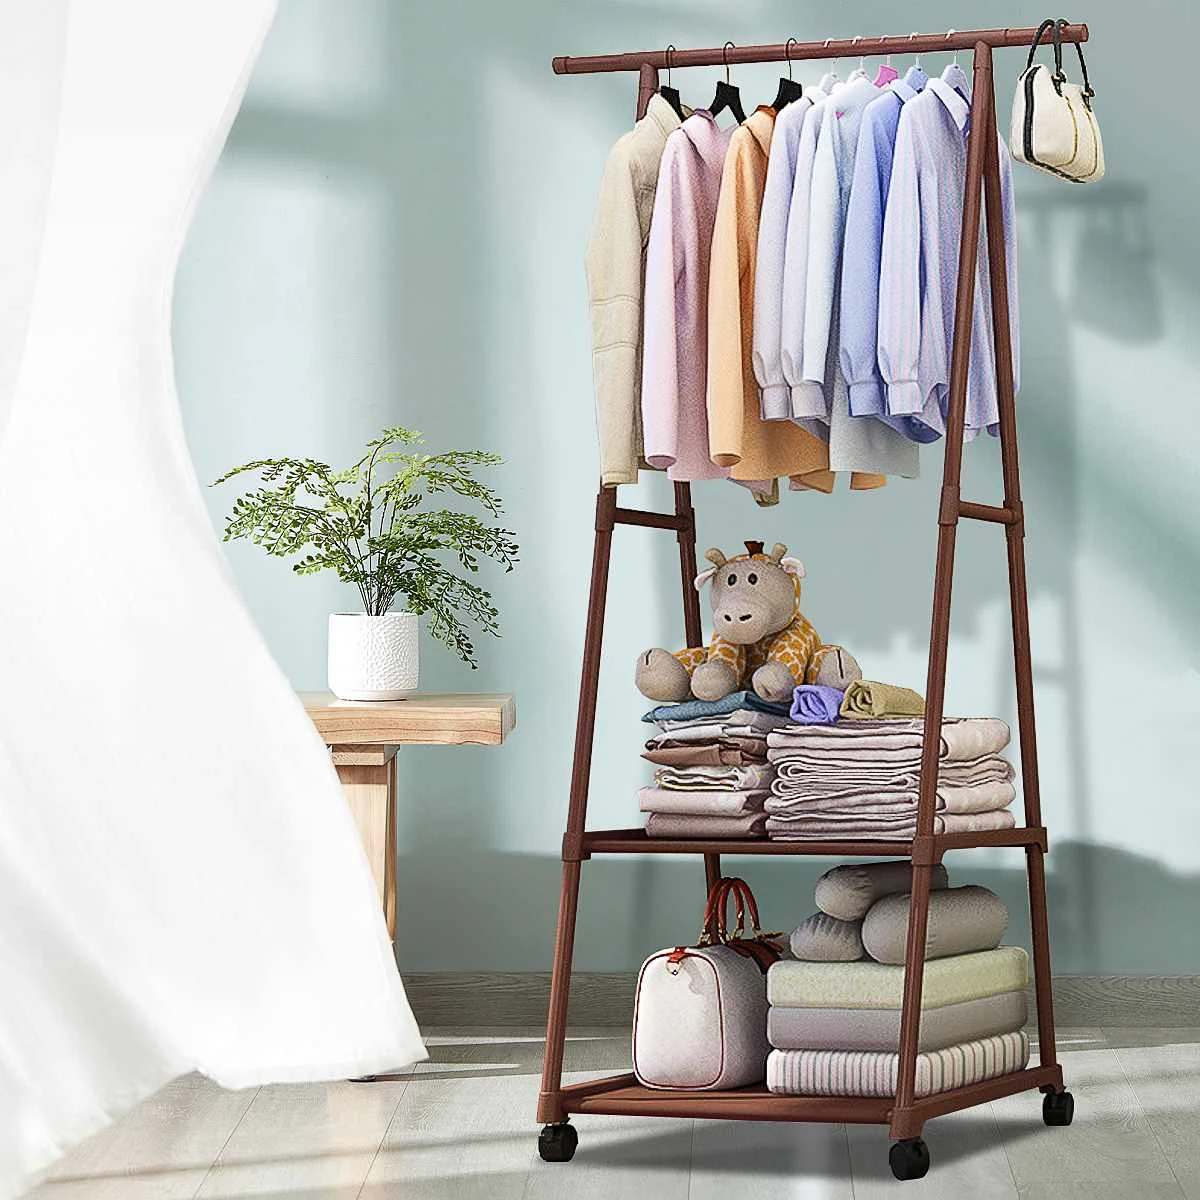 Removable Metal Coat Rack Floor Shelf Stand with Wheels Multifunction Storage Rack Organizer Garment Clothes Holder Shelves